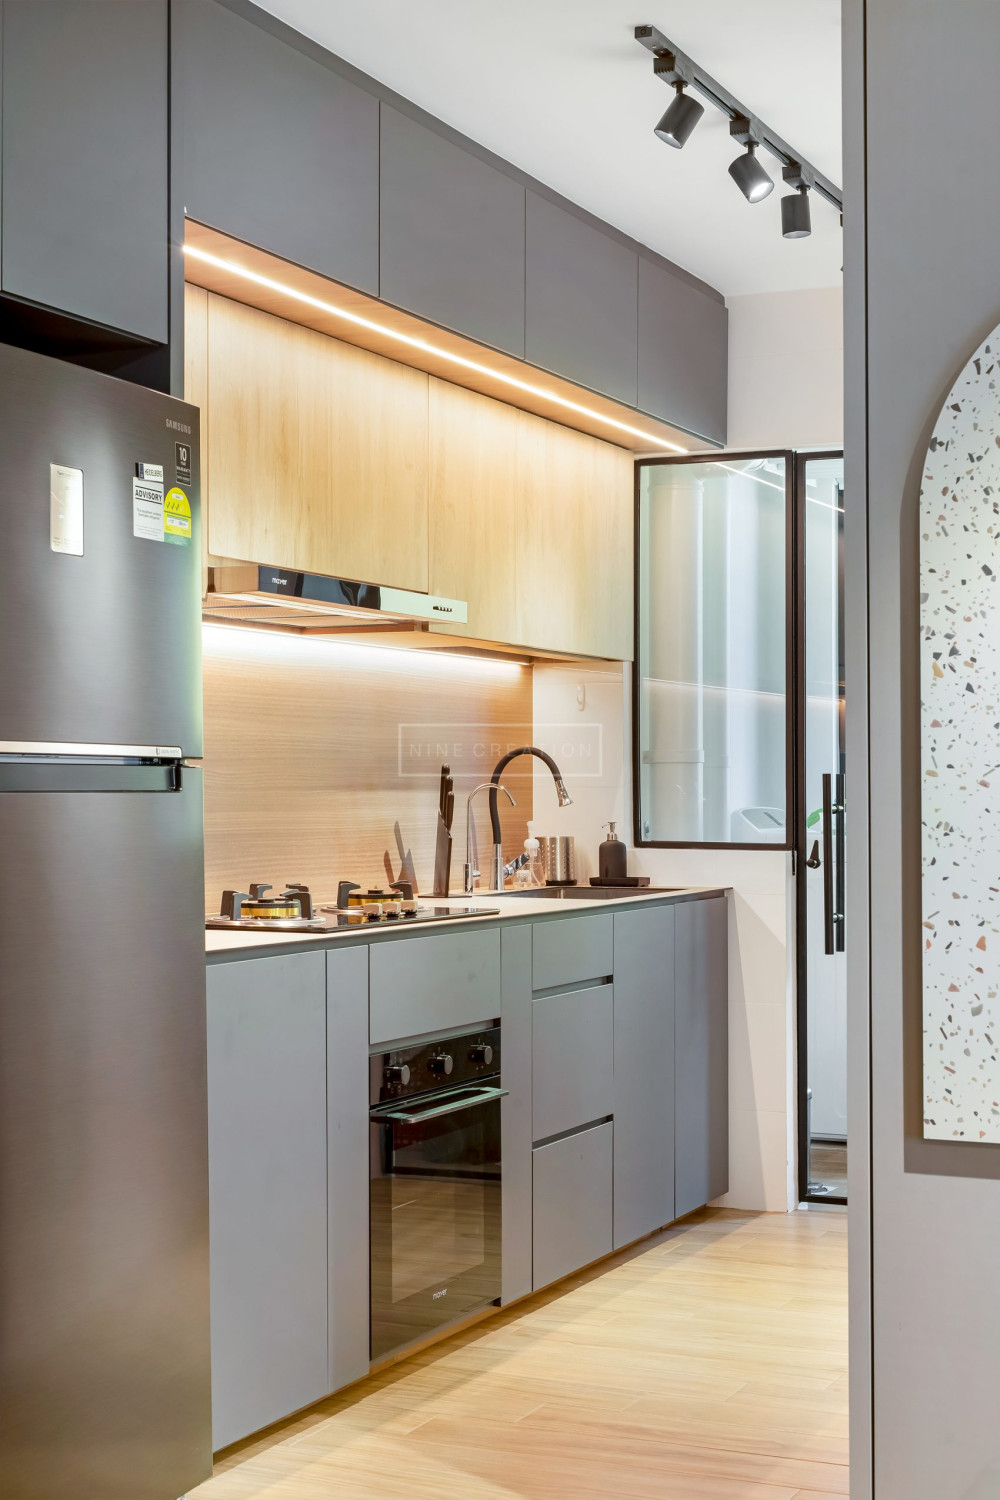 Stunning Ideas For Your HDB Kitchen Design Singapore - creation